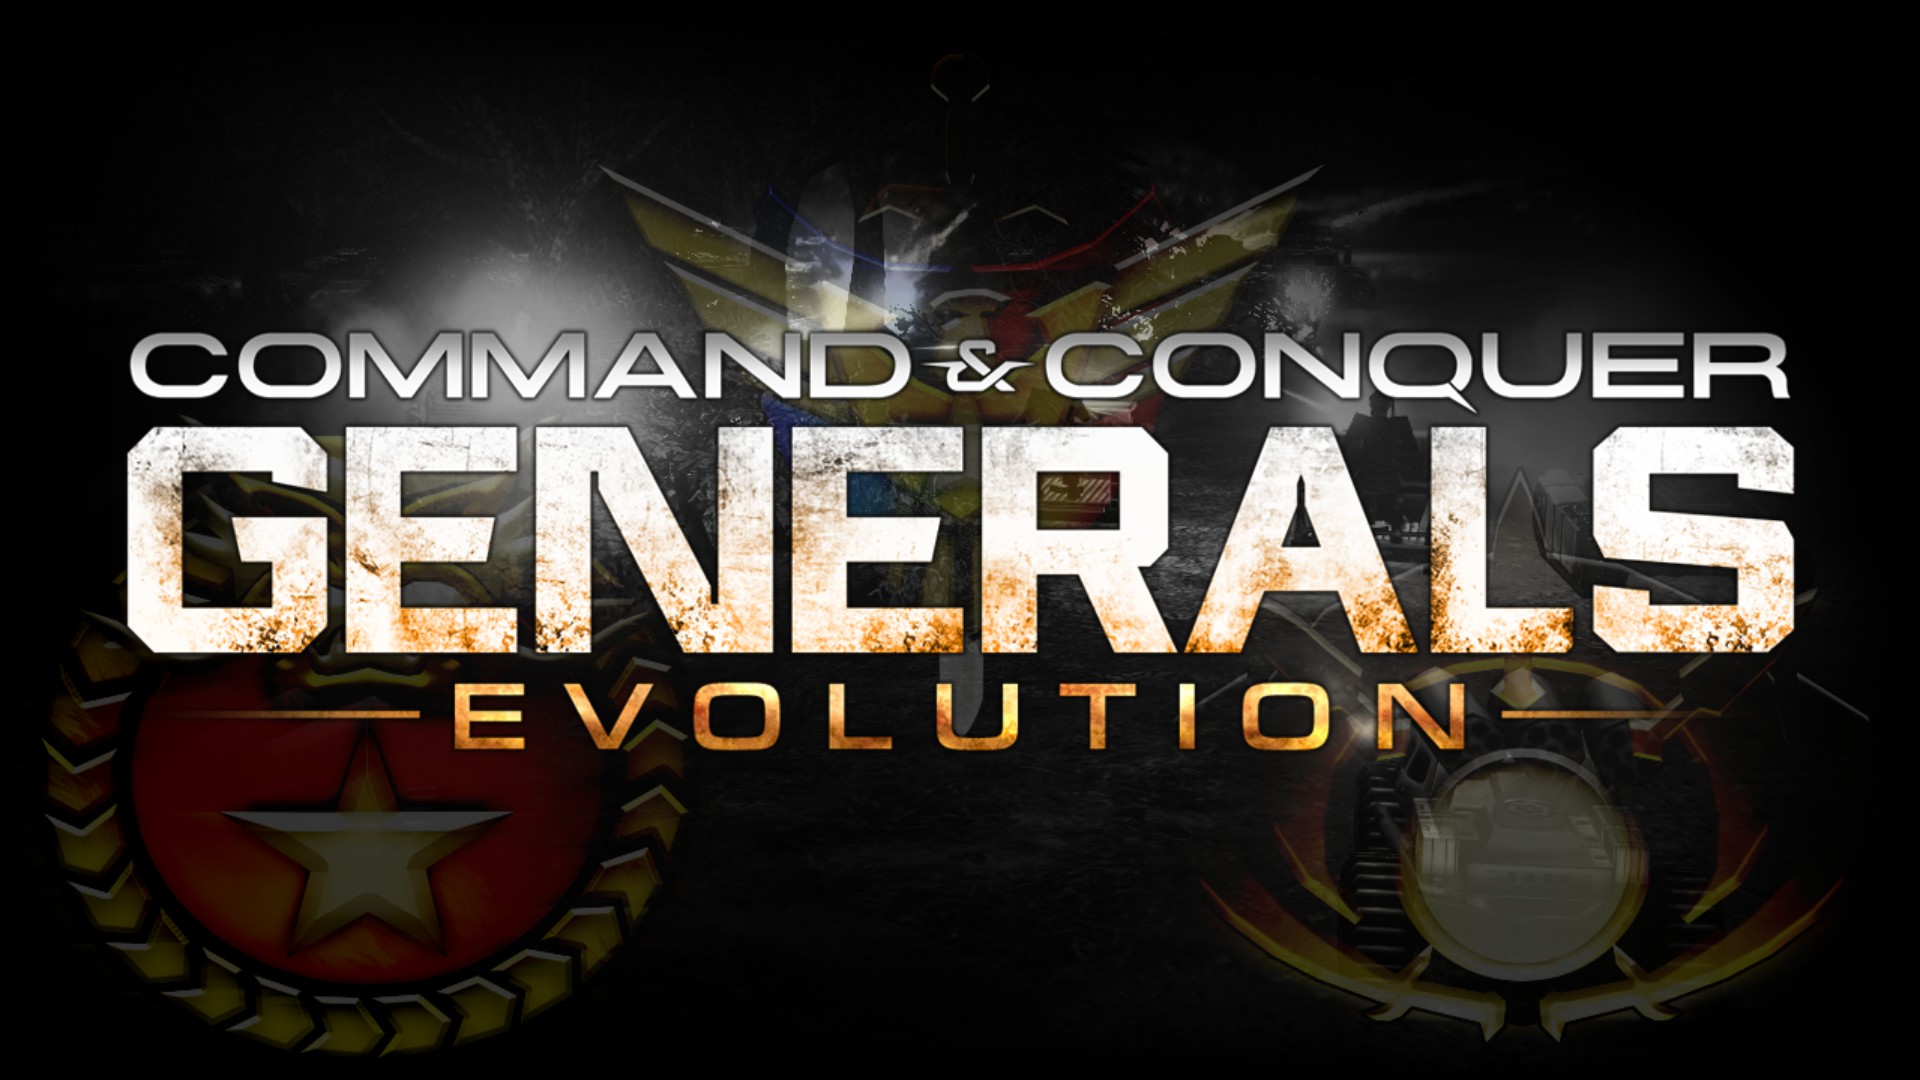 command and conquer generals evolution